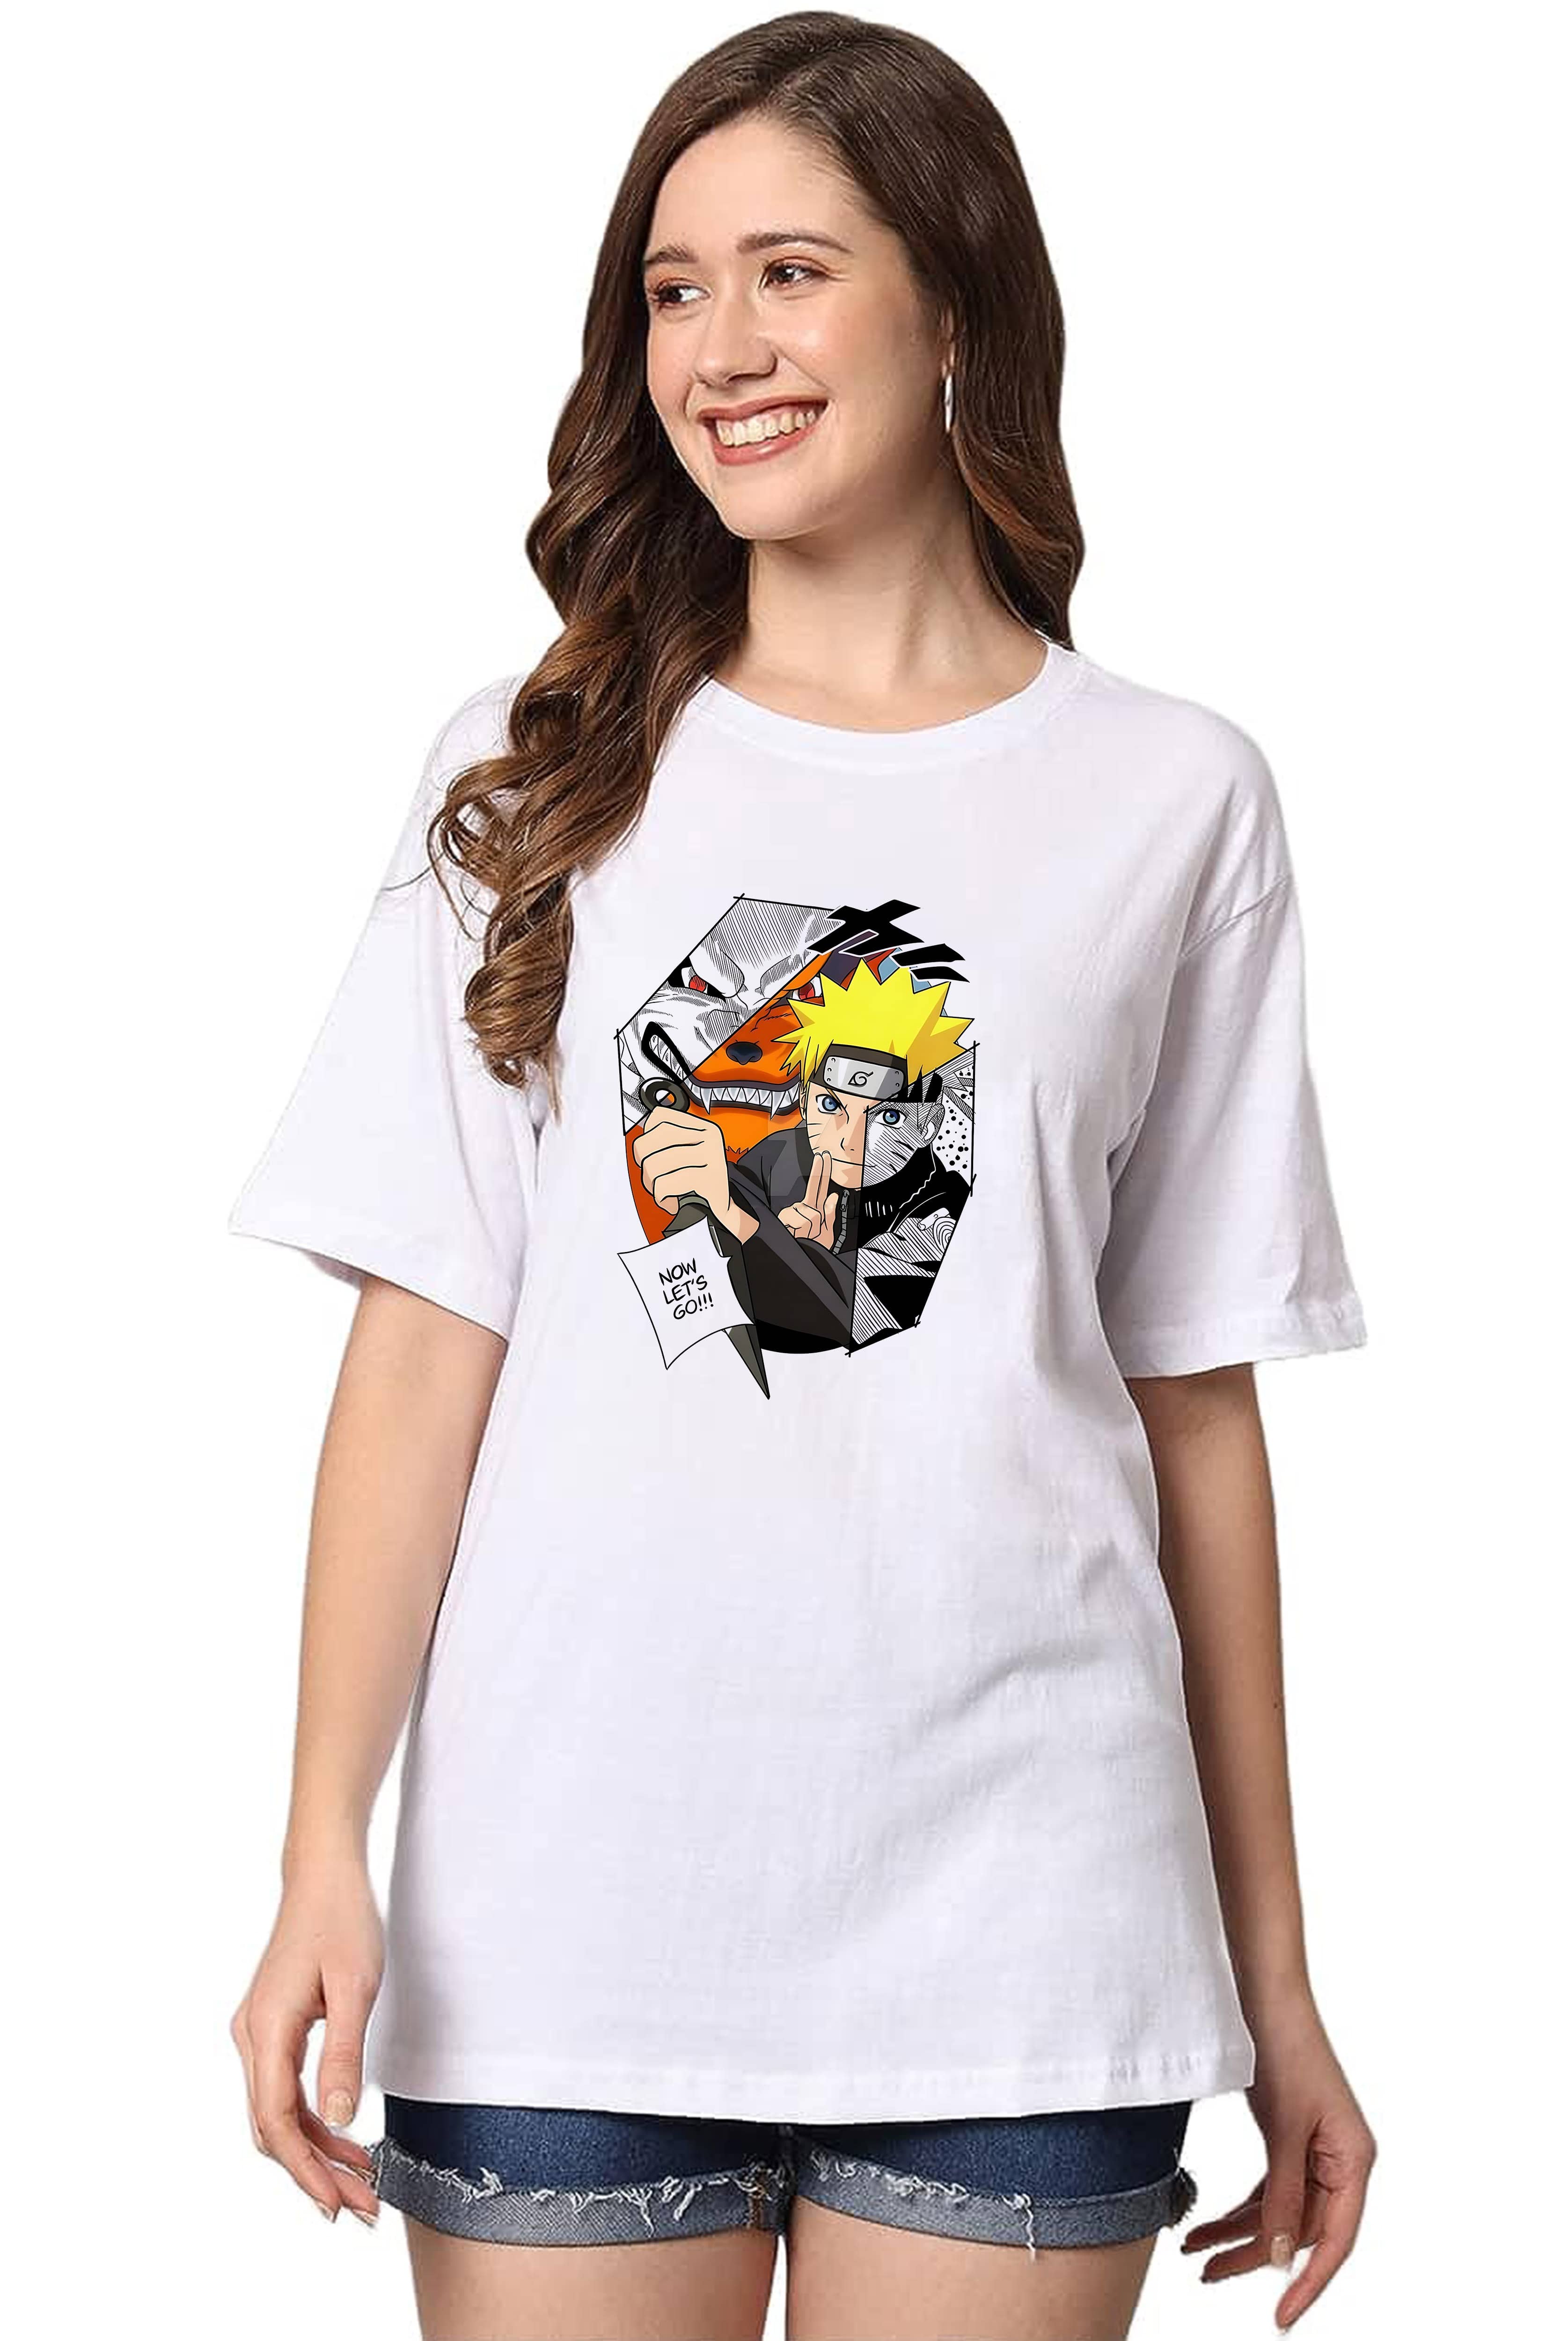 Naruto Women's Oversized Anime T-Shirt